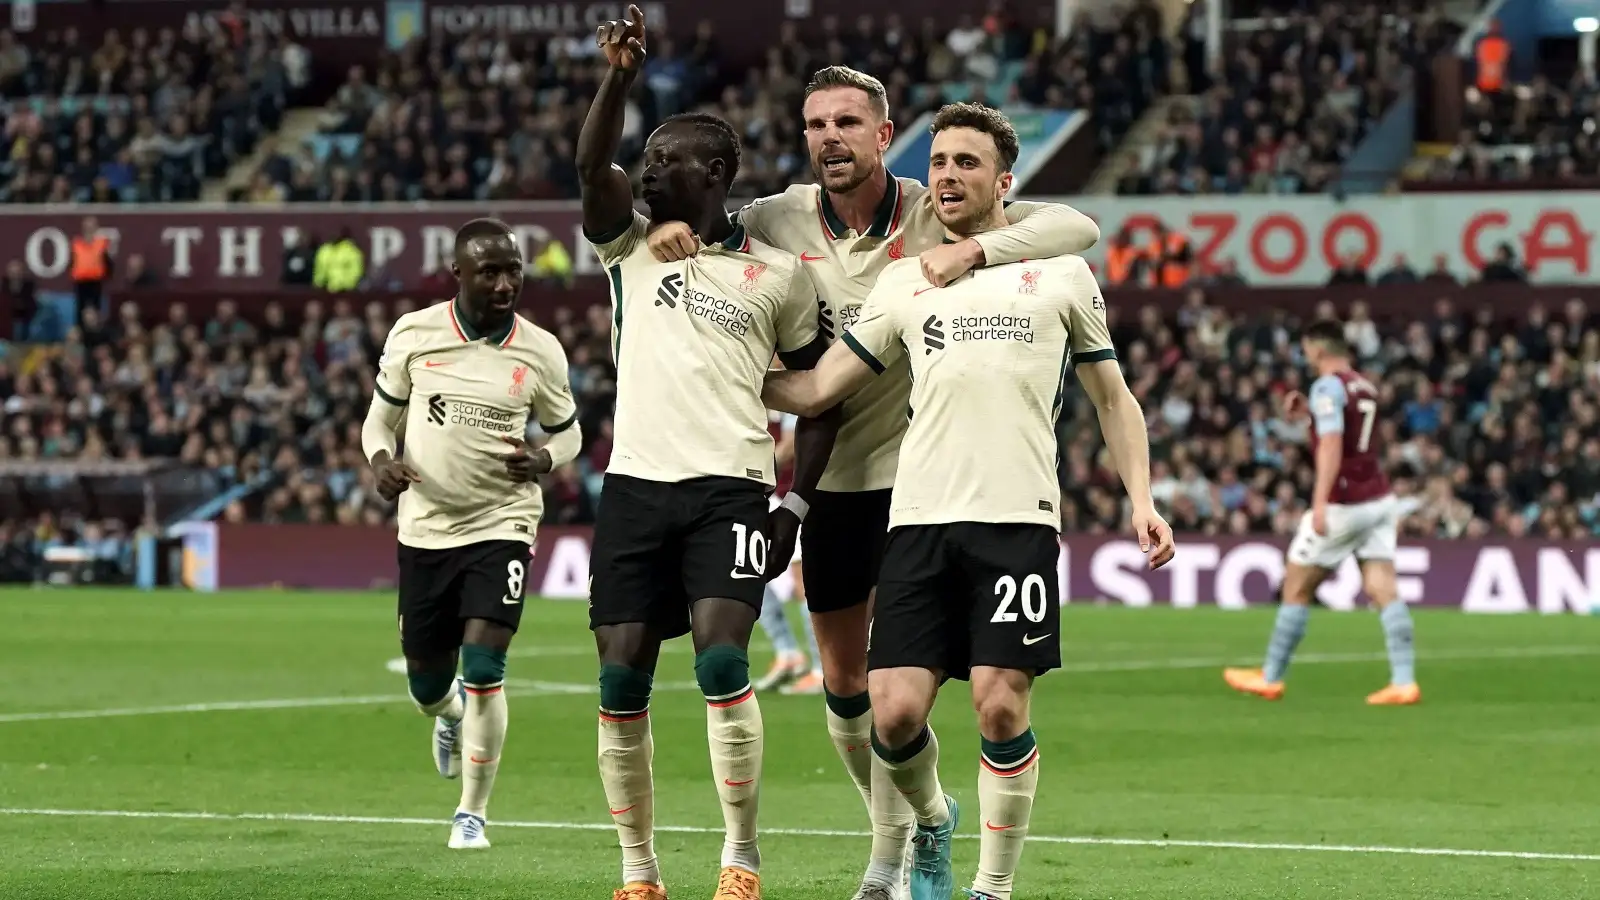 Aston Villa vs Liverpool - Sadio Mane celebrates his goal